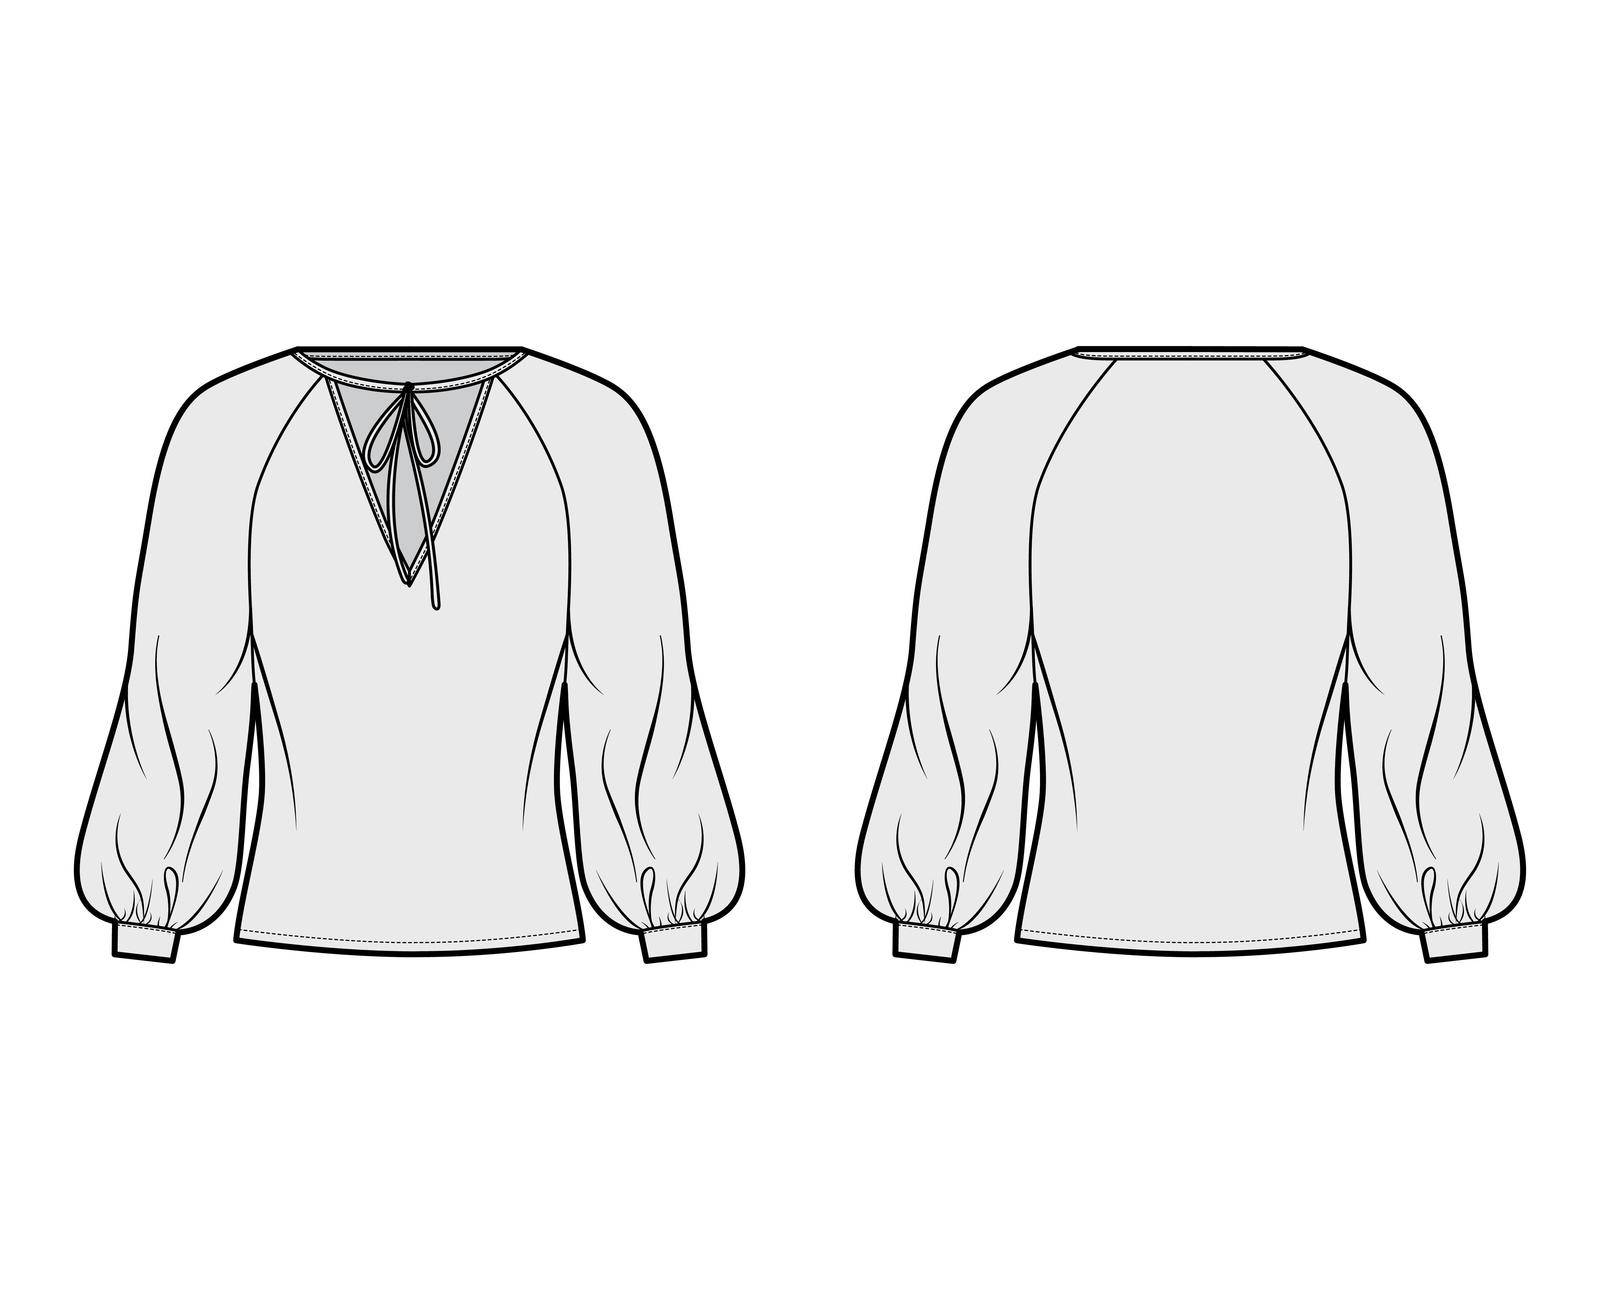 Tie-detailed neckline blouse technical fashion illustration with long raglan bishop sleeves, oversized, elongated hem. Flat apparel shirt template front back grey color. Women, unisex top CAD mockup